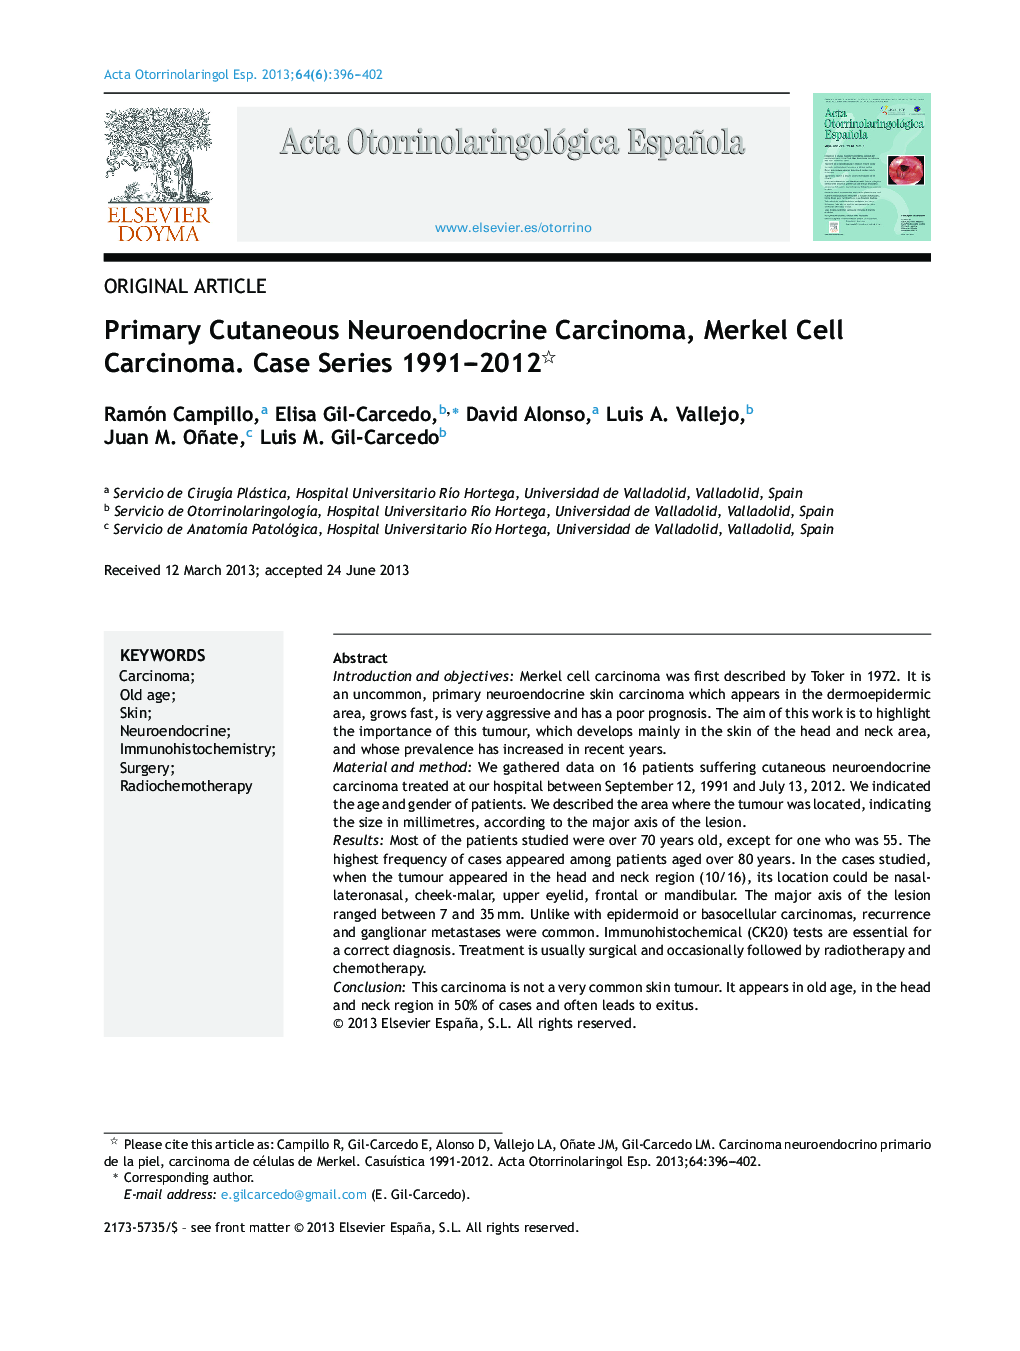 Primary Cutaneous Neuroendocrine Carcinoma, Merkel Cell Carcinoma. Case Series 1991–2012 